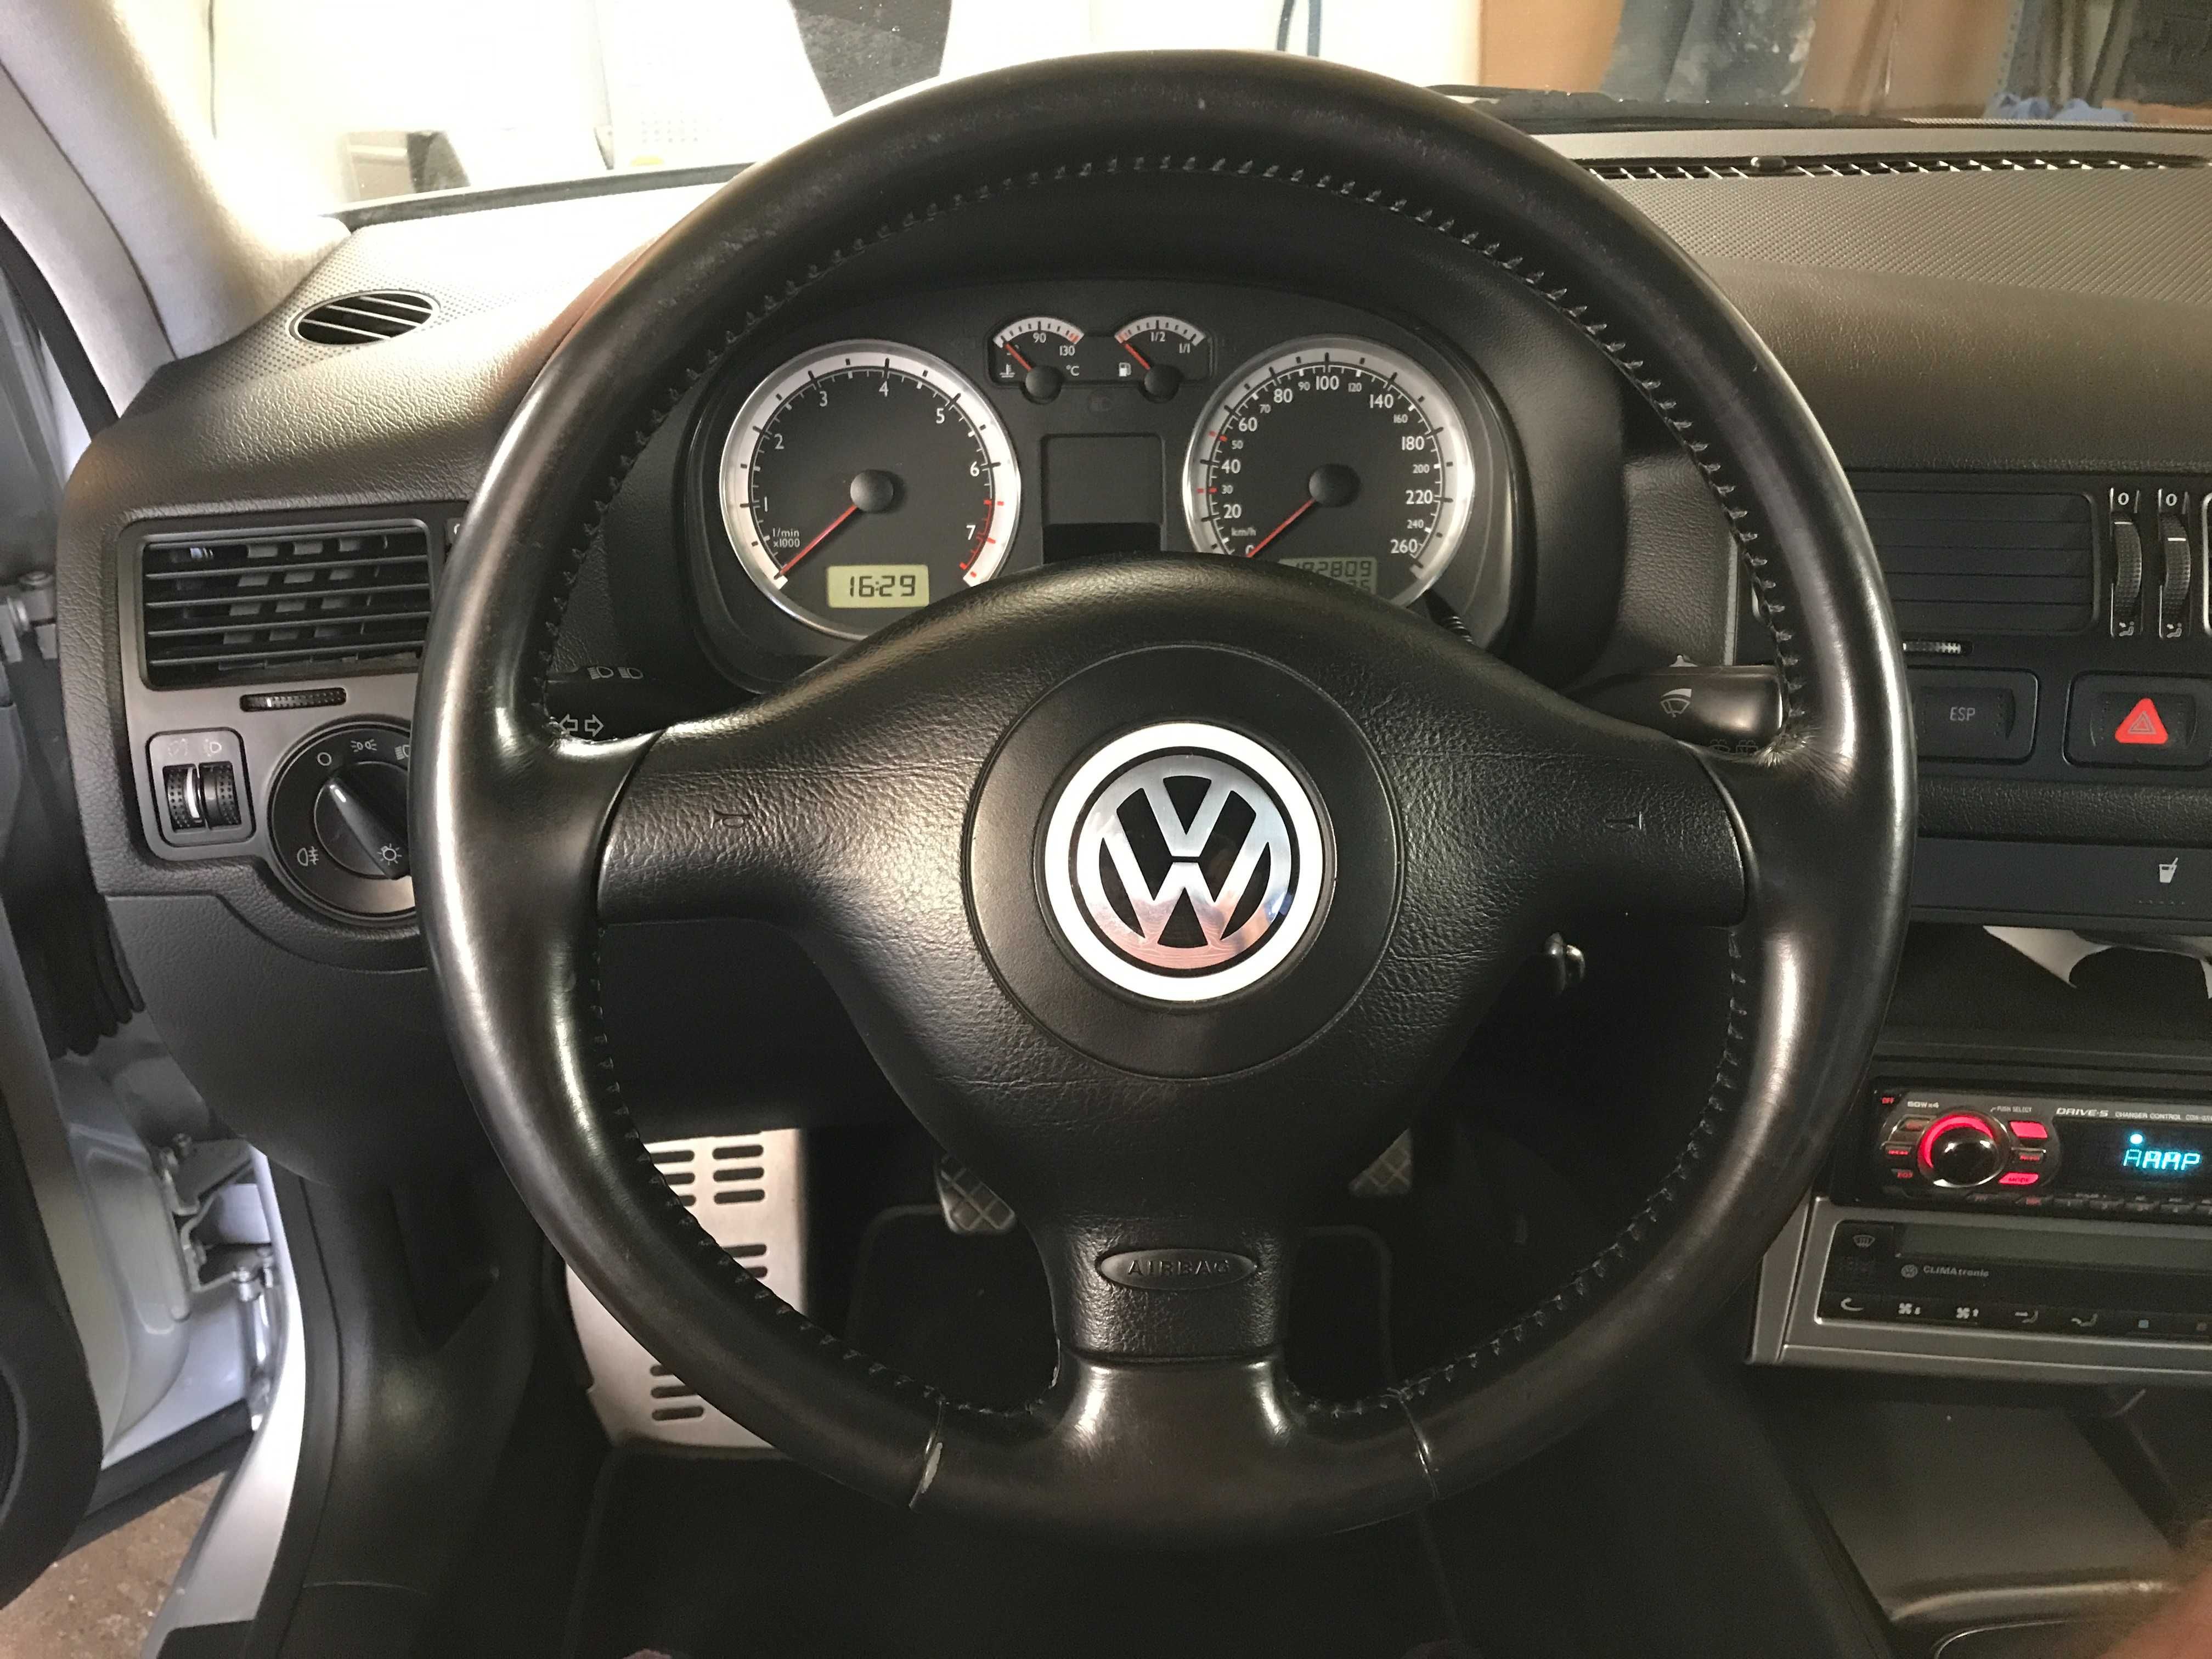 VW Bora 1.6 benzyna 105 PS